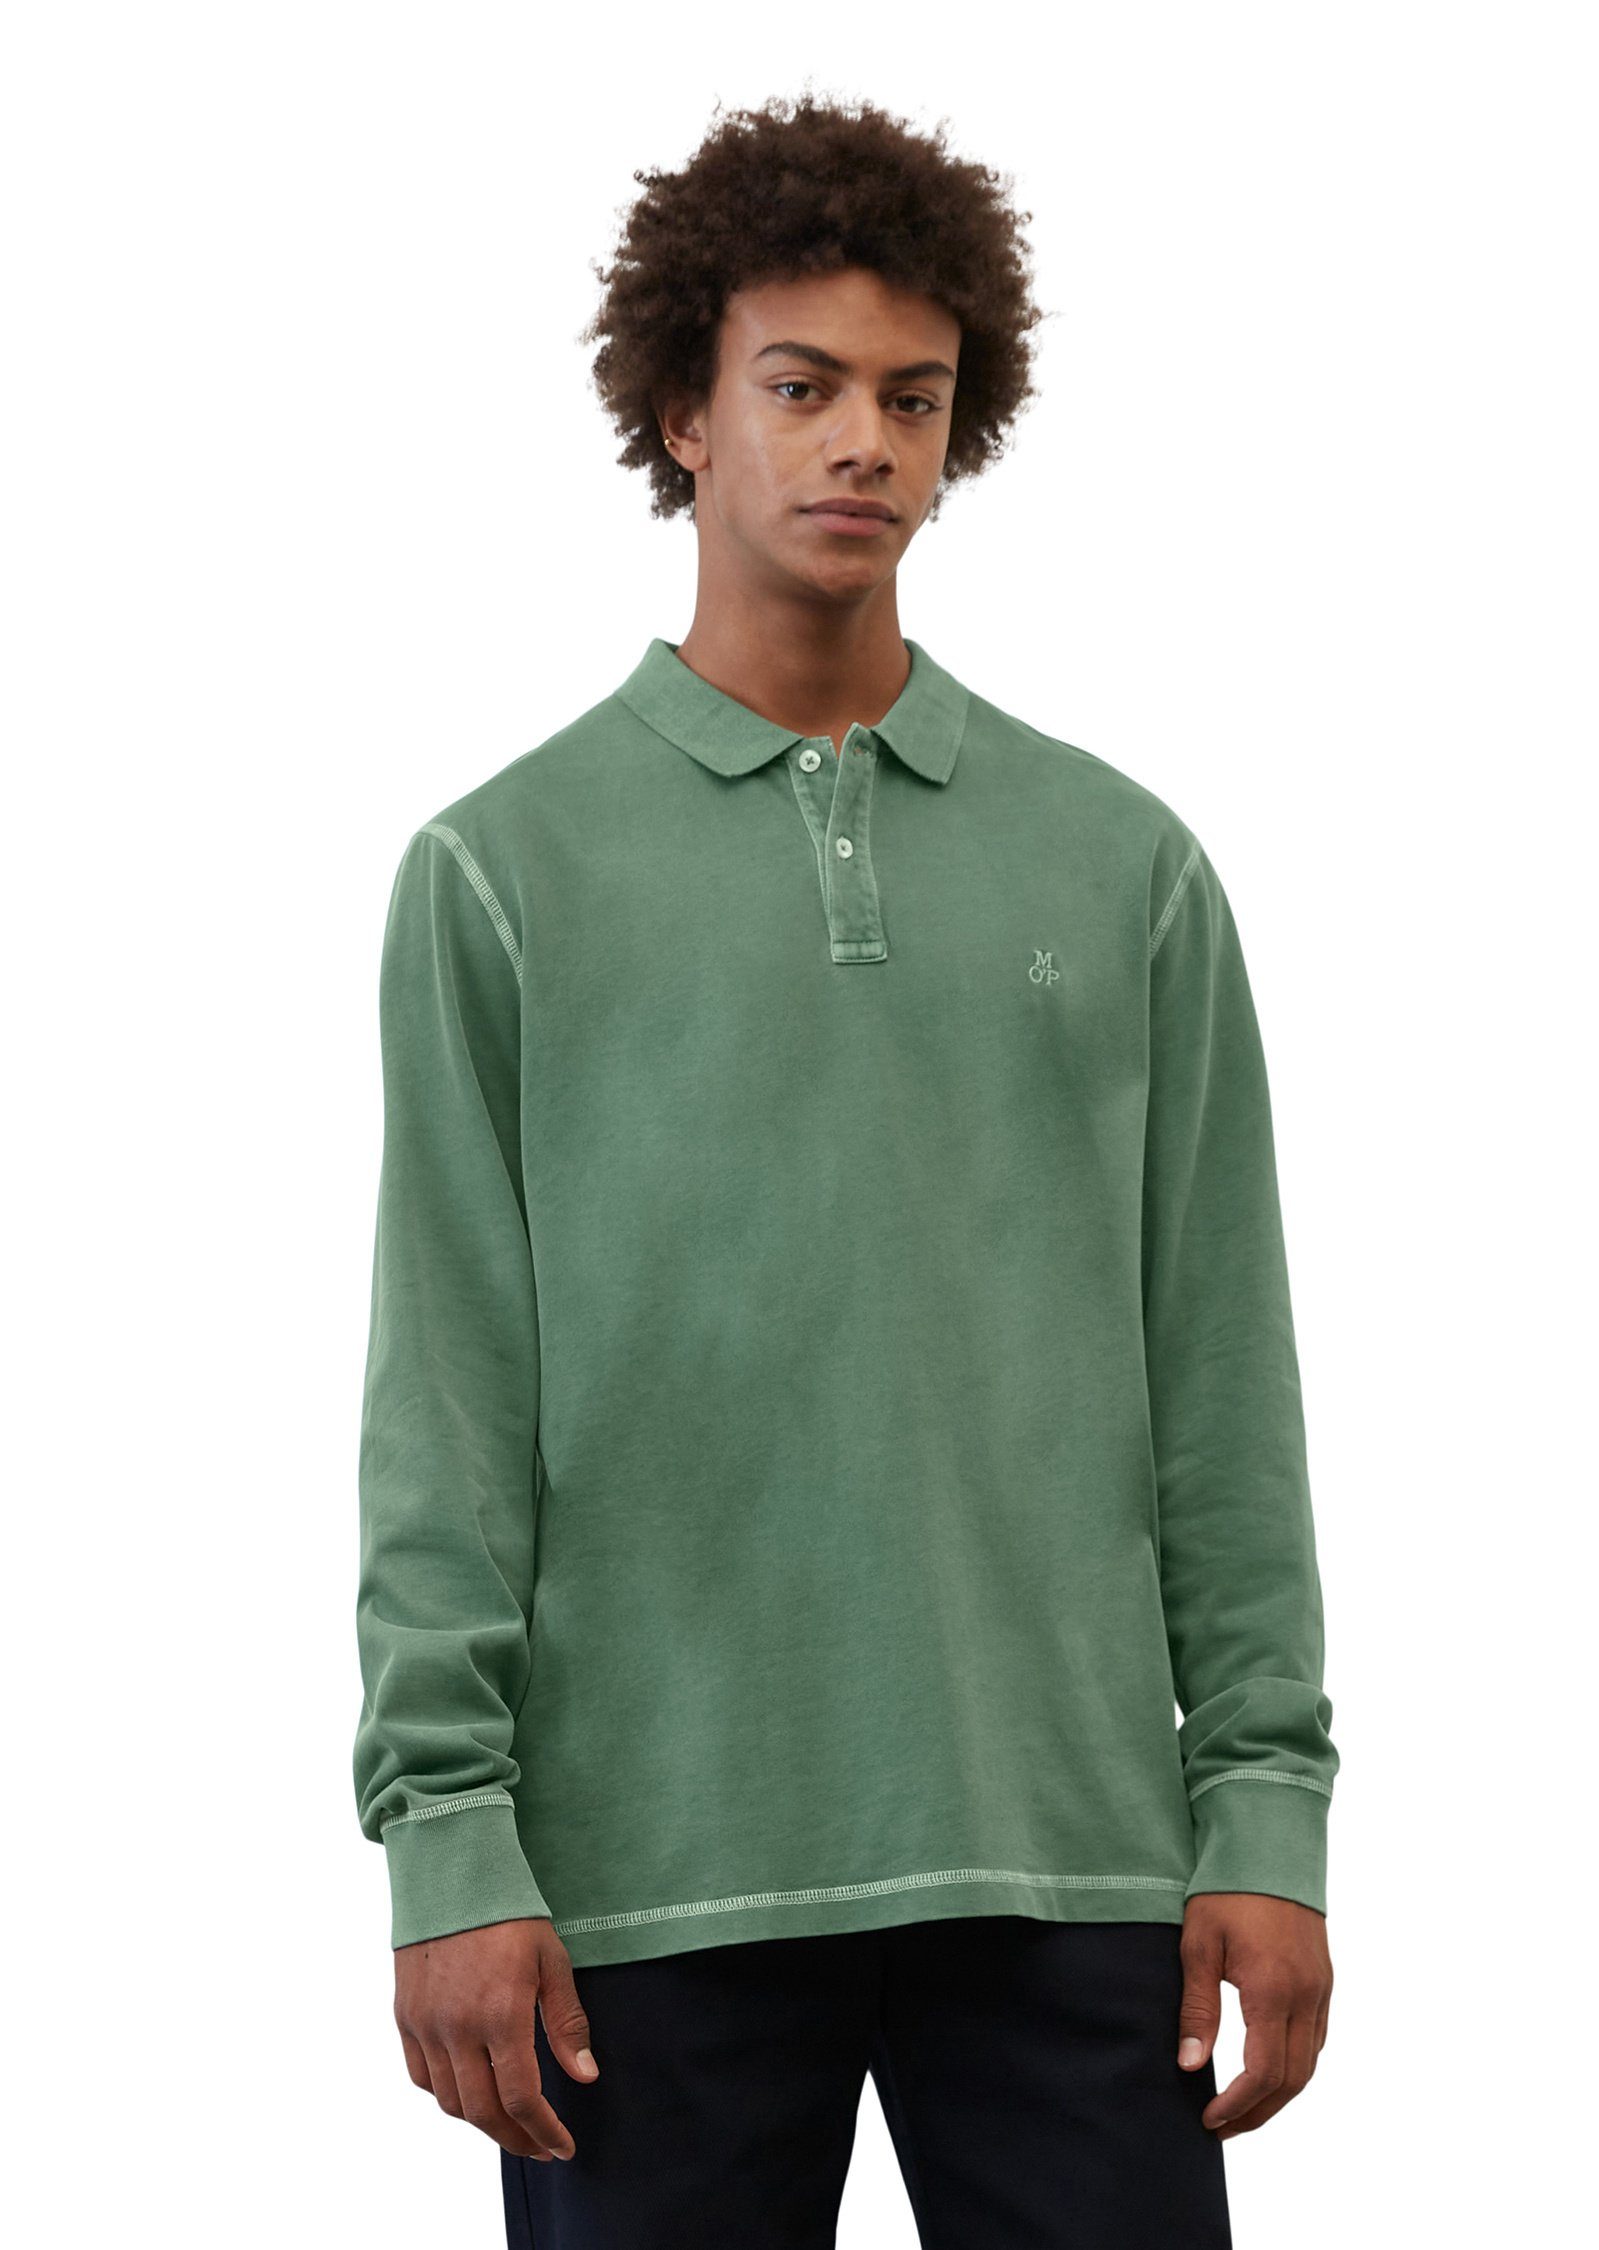 Marc O'Polo Langarm-Poloshirt aus softer Bio-Baumwolle dunkelgrün